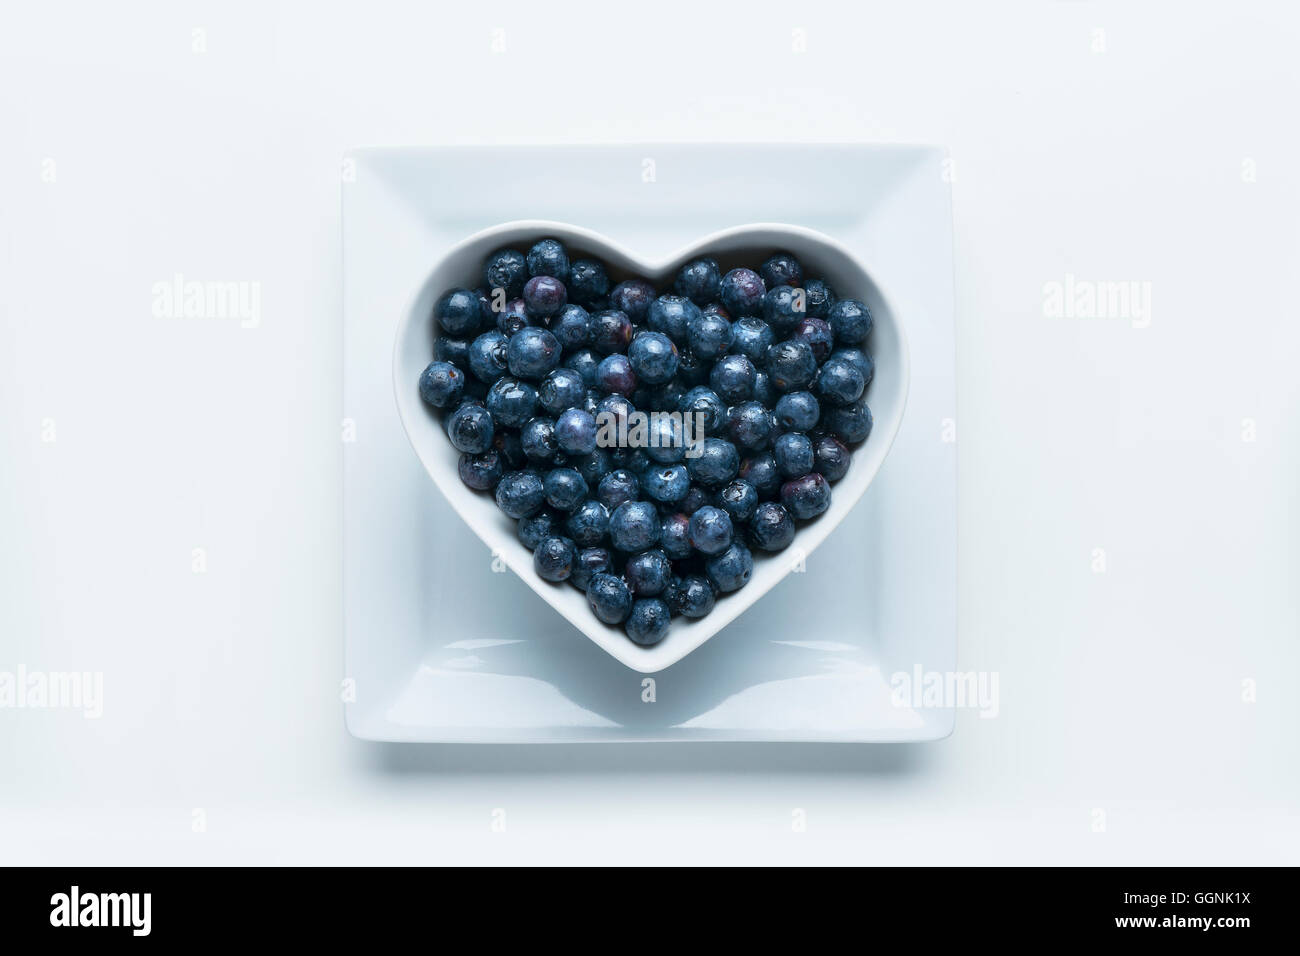 Blueberries in heart-shape bowl on white background Stock Photo